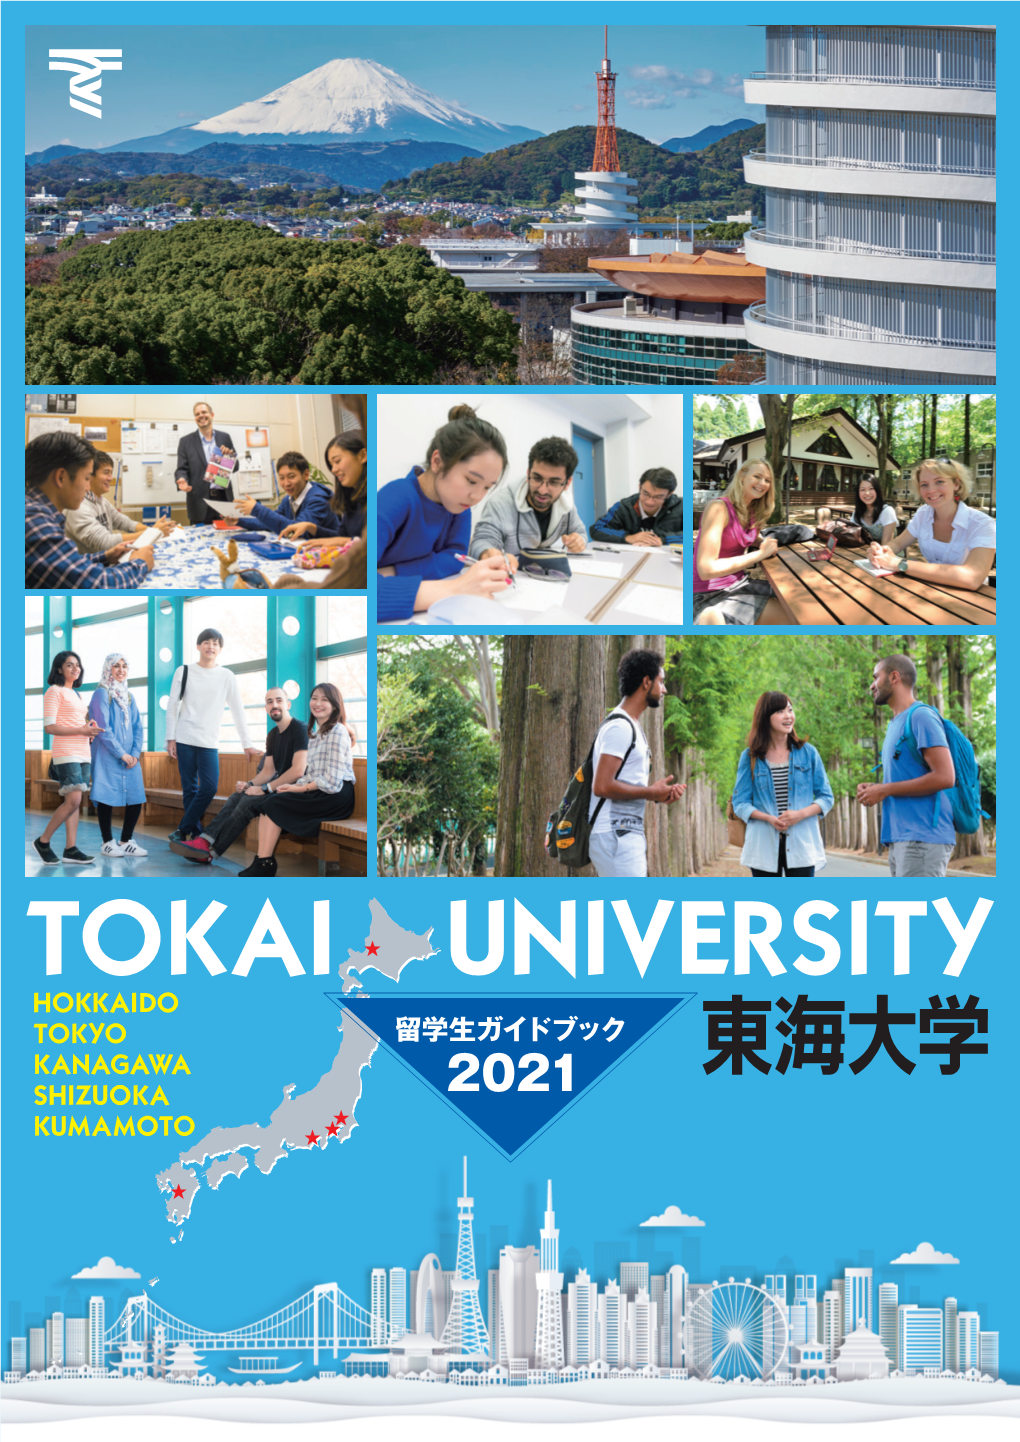 TOKAI UNIVERSITY HOKKAIDO TOKYO 留 学 生 ガ イド ブック K ANAGAWA SHIZUOKA 2021 KUMAMOTO Undergraduate Schools/Departments